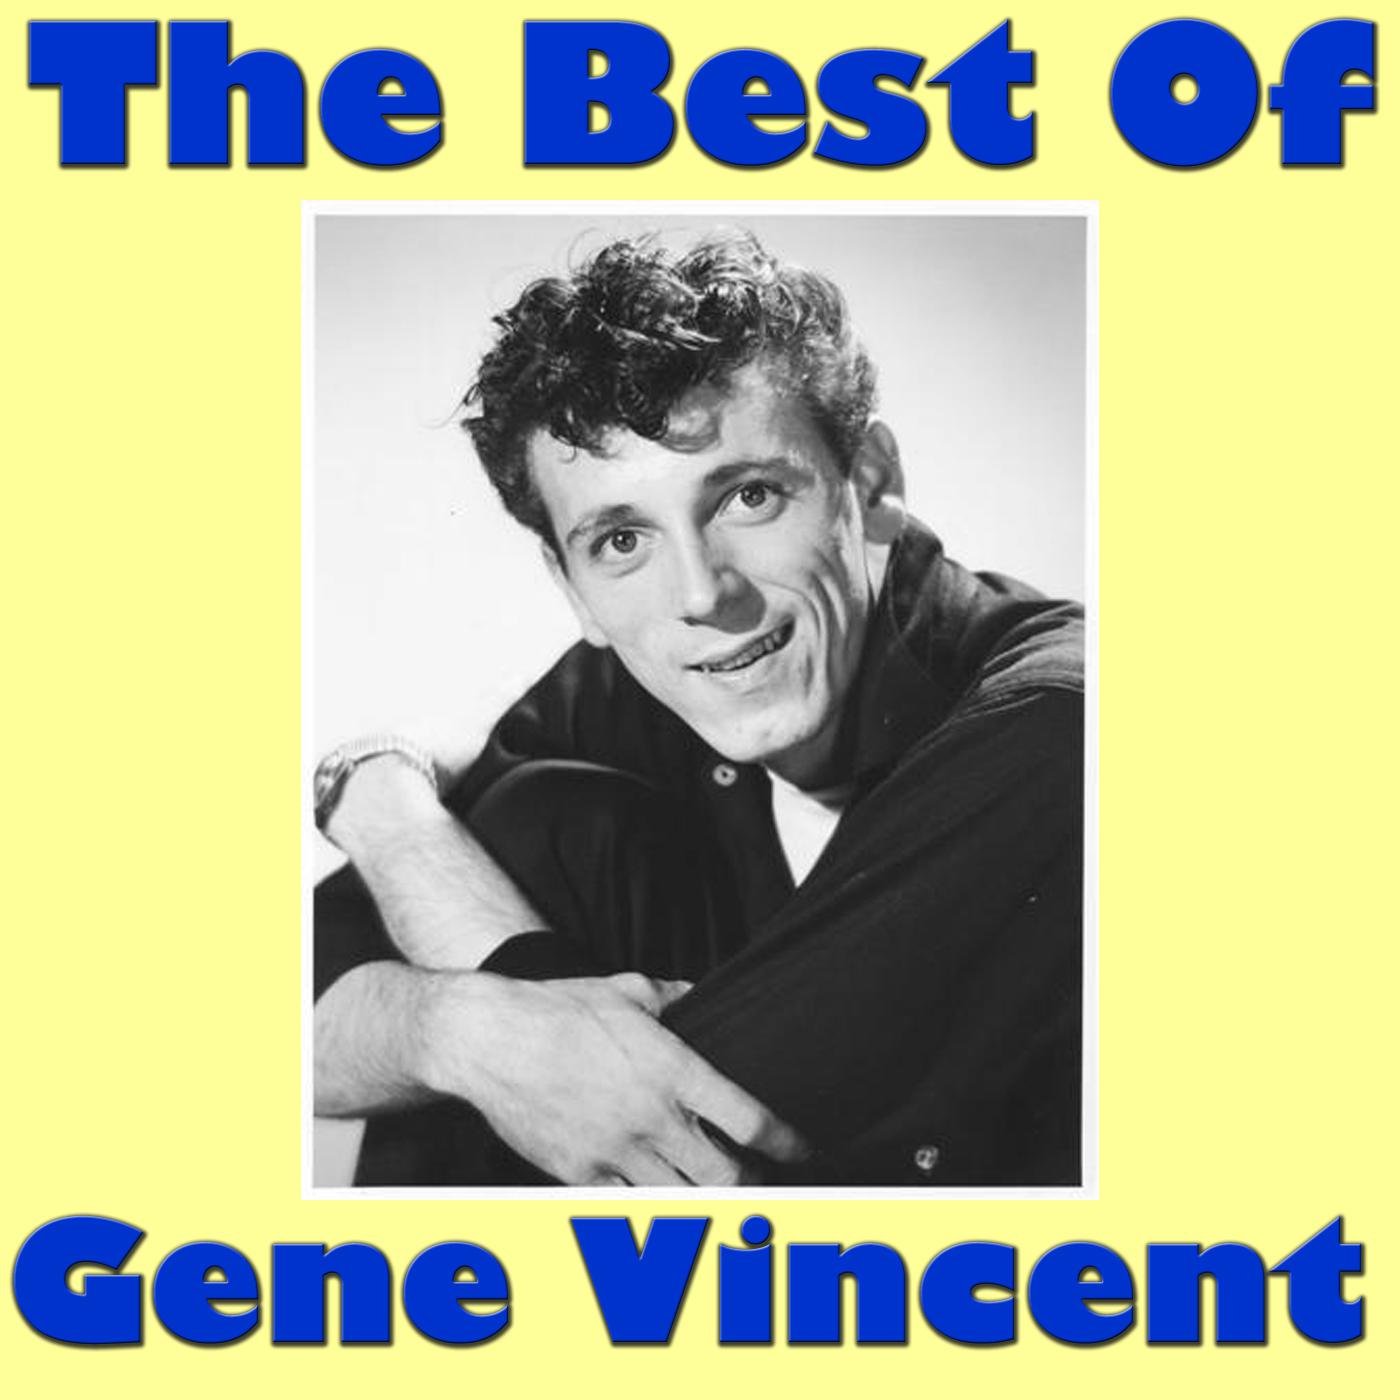 The Best Of Gene Vincent